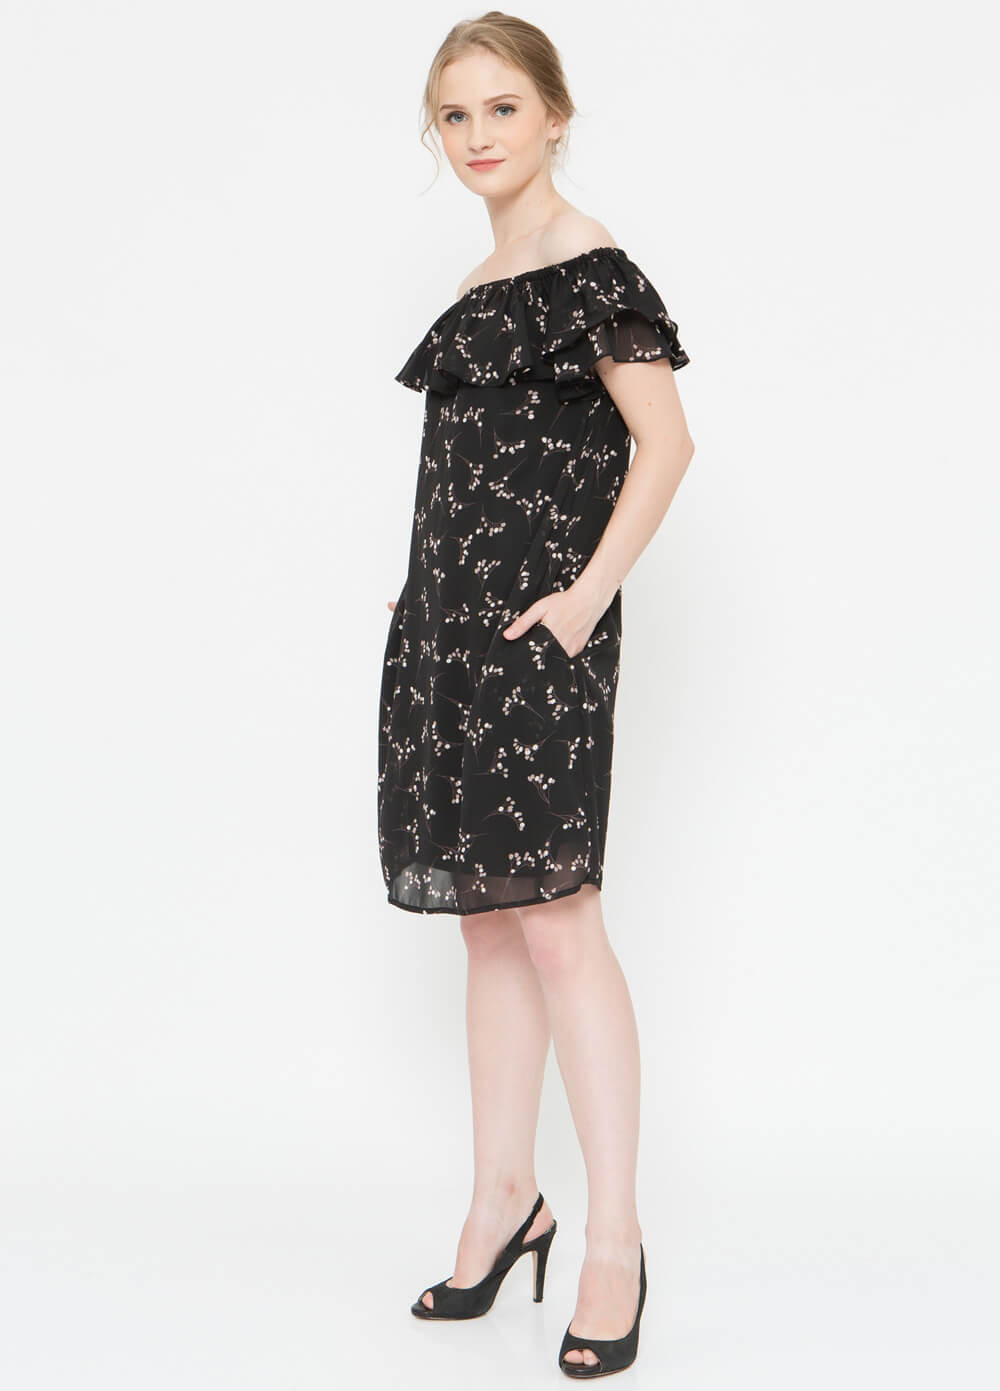 Clarinda Maternity Nursing Party Dress in Black Print by Spring